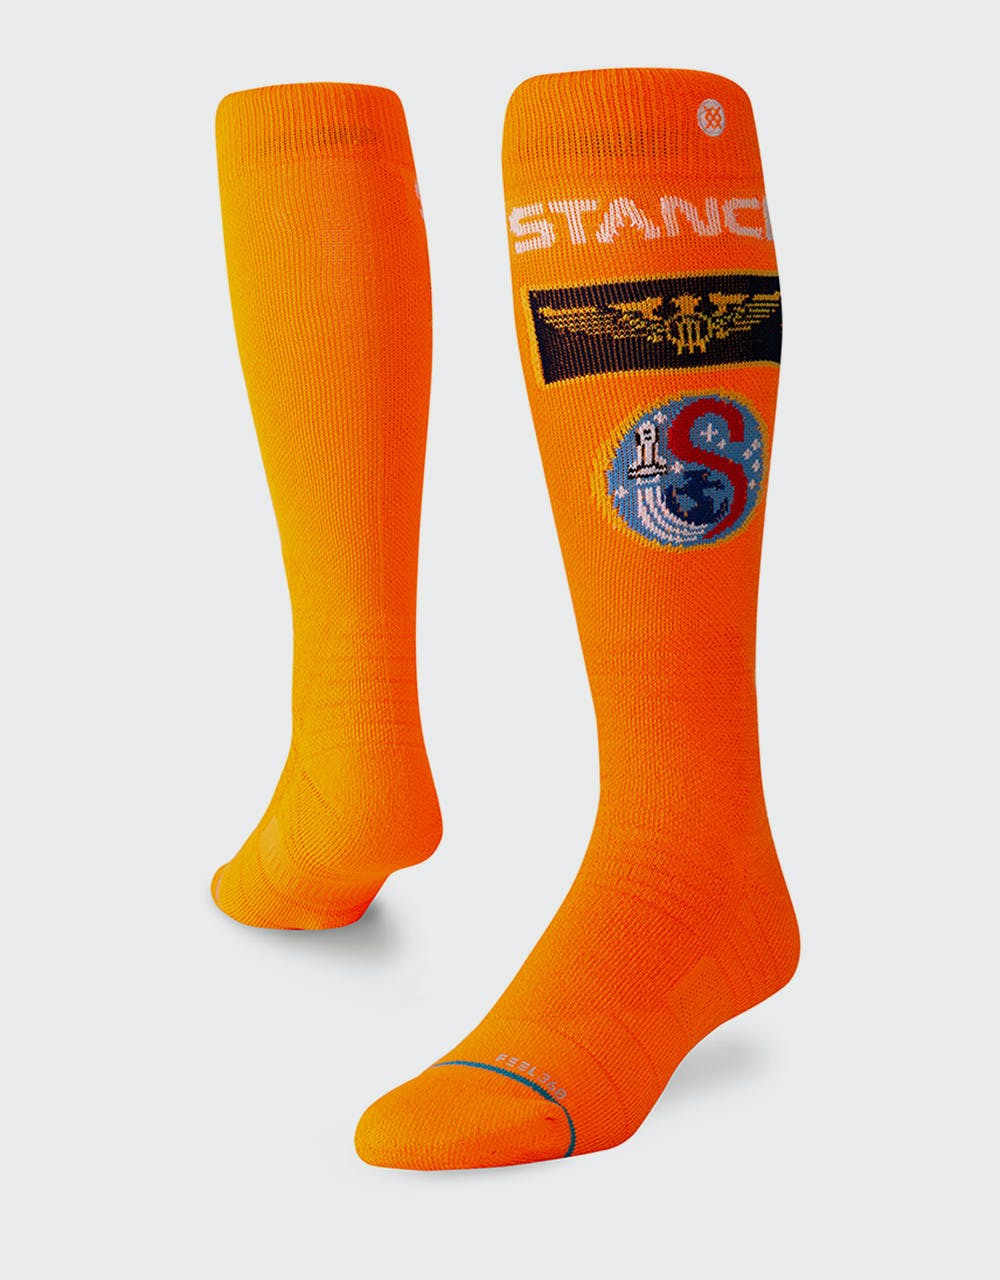 Stance Launch Pad Snowboard Socks - Orange